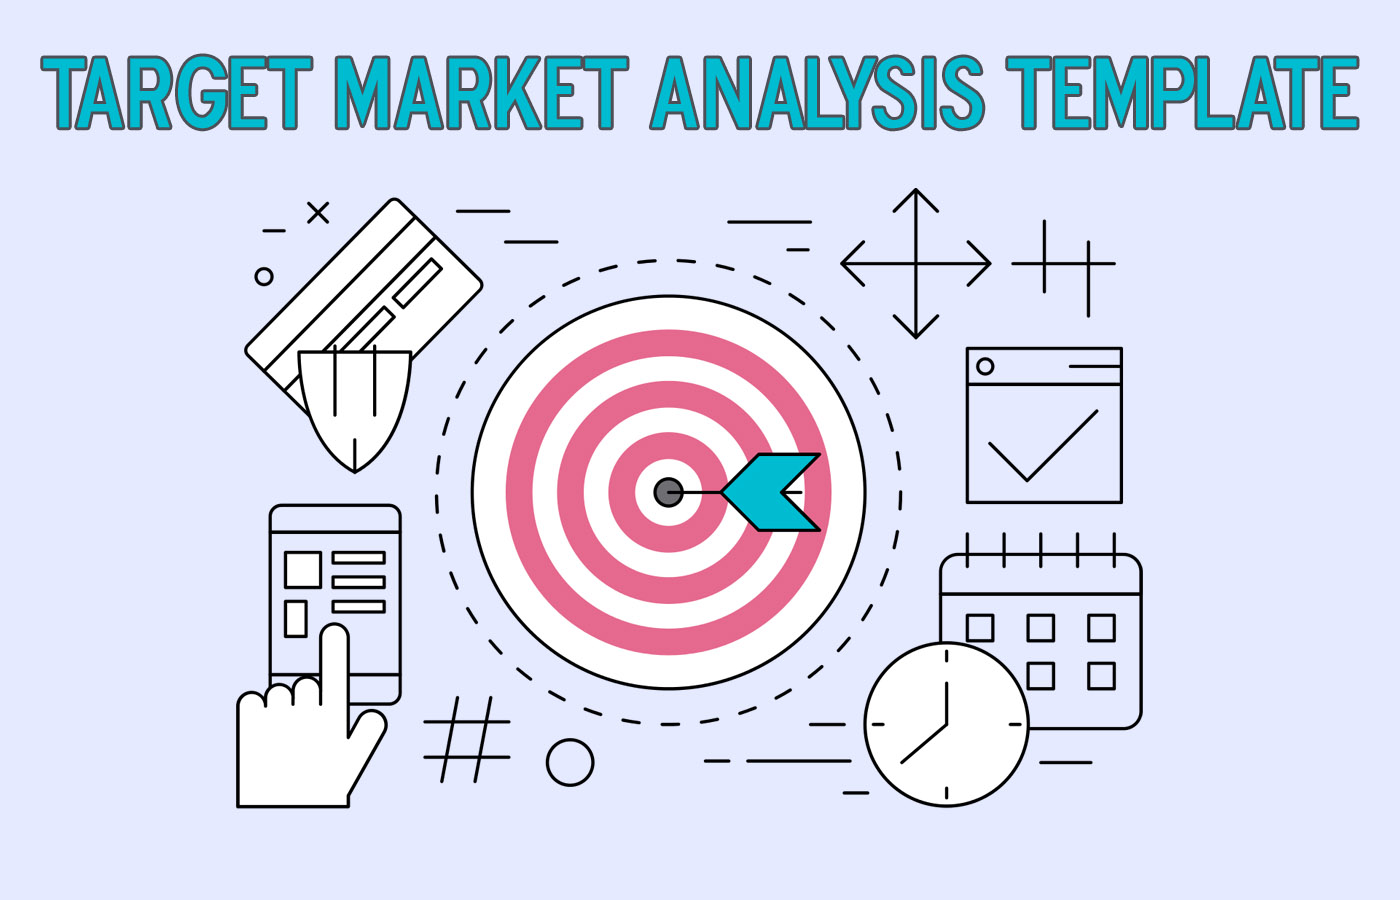 The Target Market Analysis Template